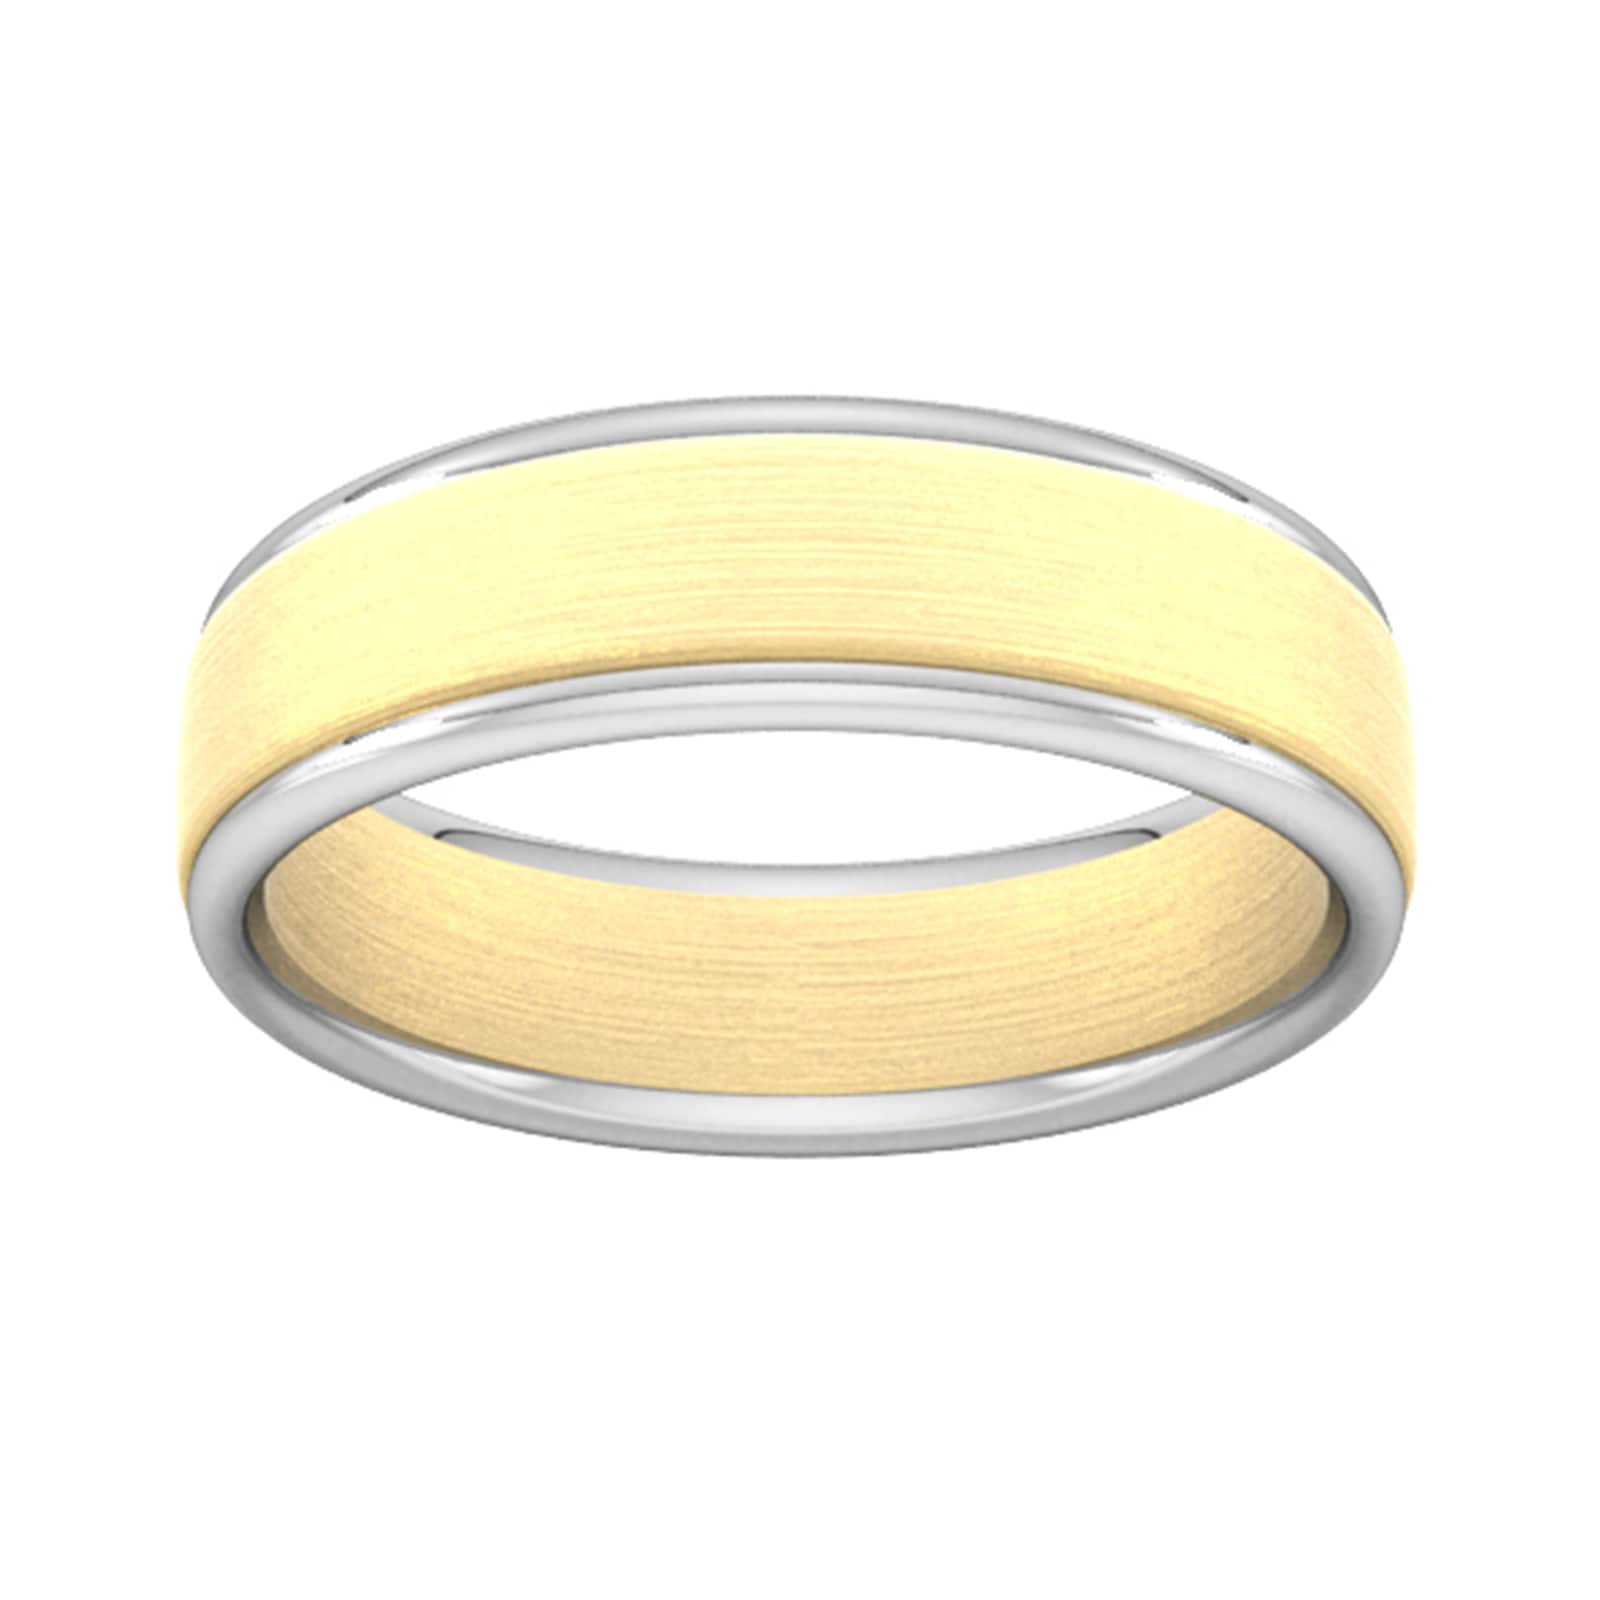 6mm Wedding Ring In 9 Carat Yellow & White Gold - Ring Size I